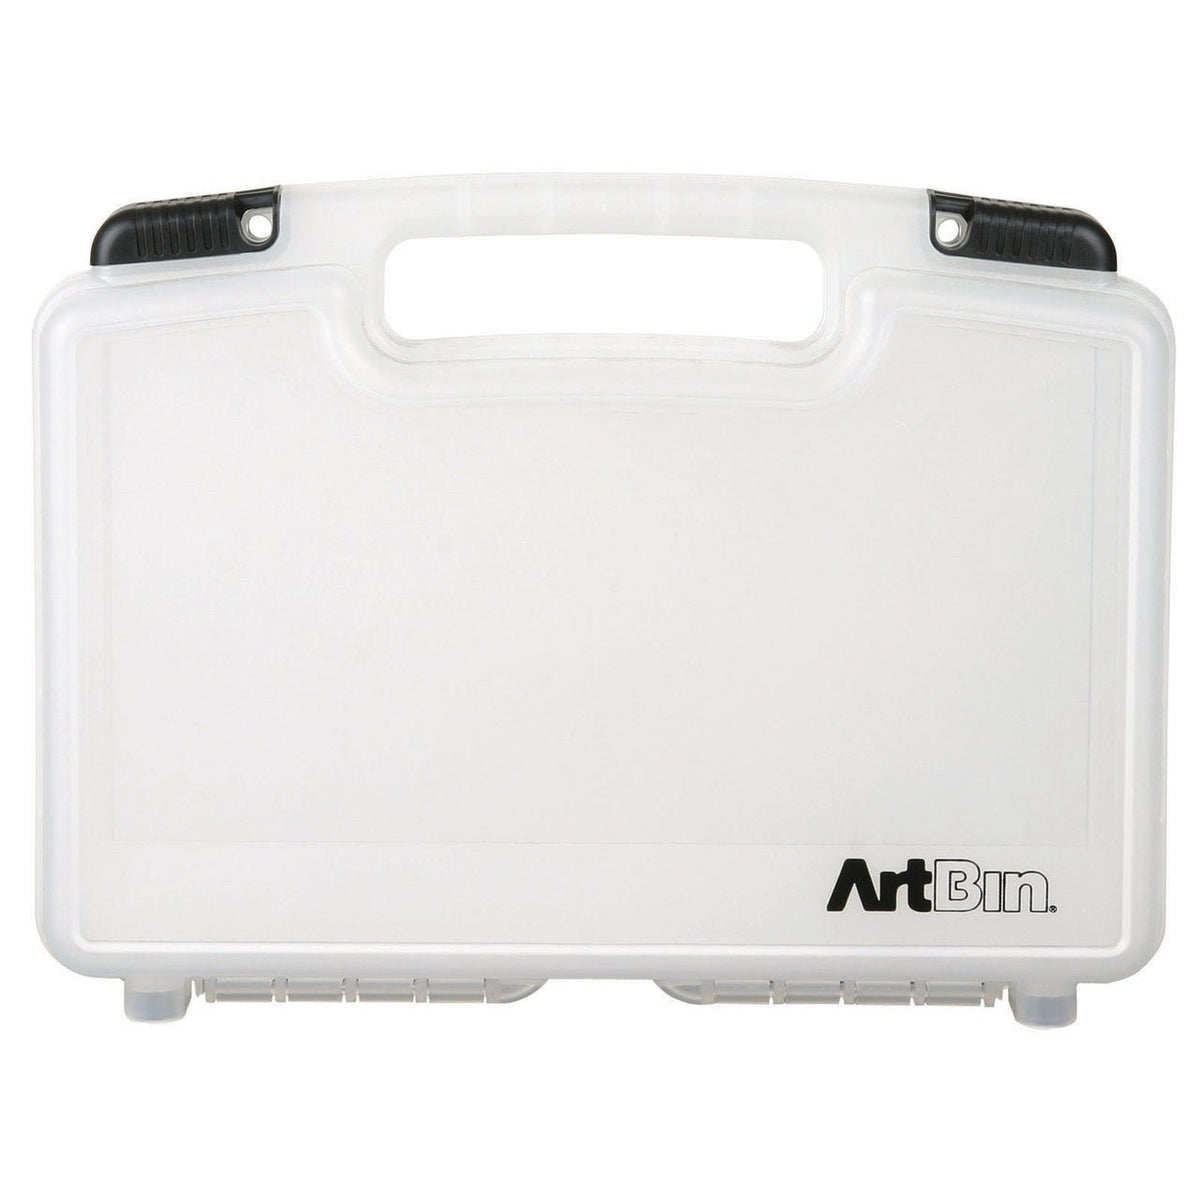 Artbin Quickview Case 14 inchw x 10.25 inch x 3.375 inch - merriartist.com